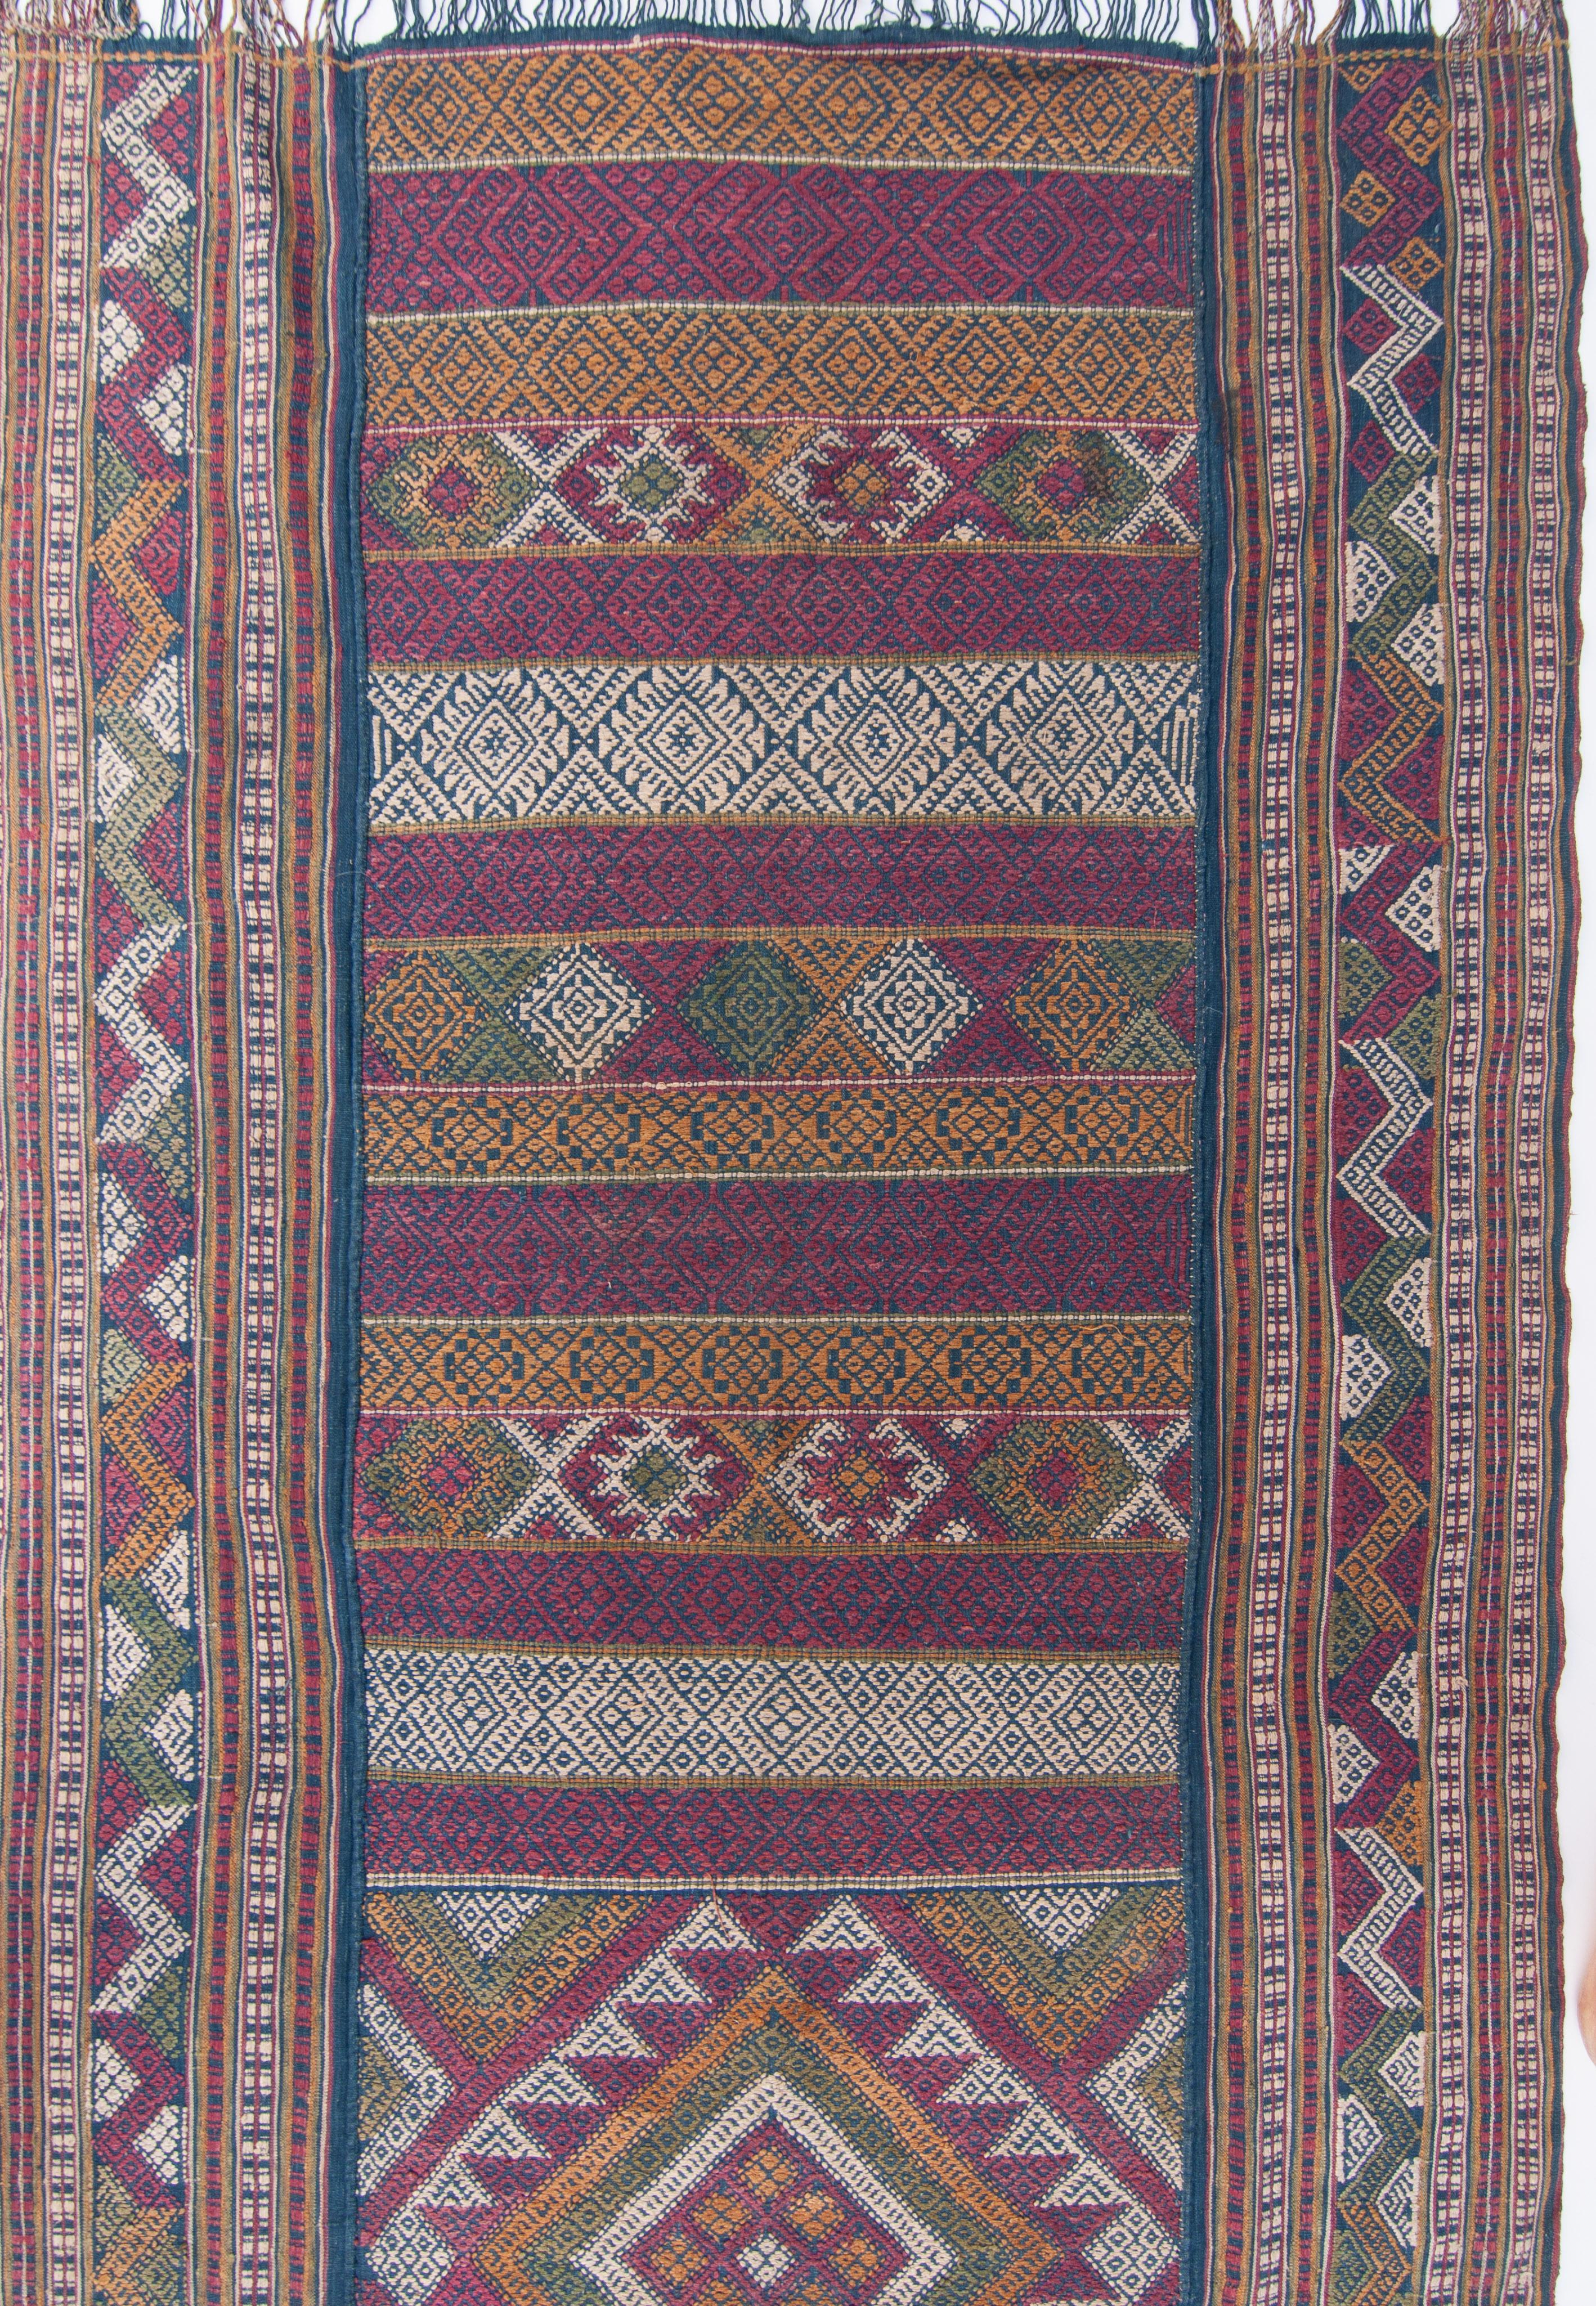 Tribal Vintage Bhutanese Ceremonial Silk Textile, Chagsi Pangkheb, Early 20th Century